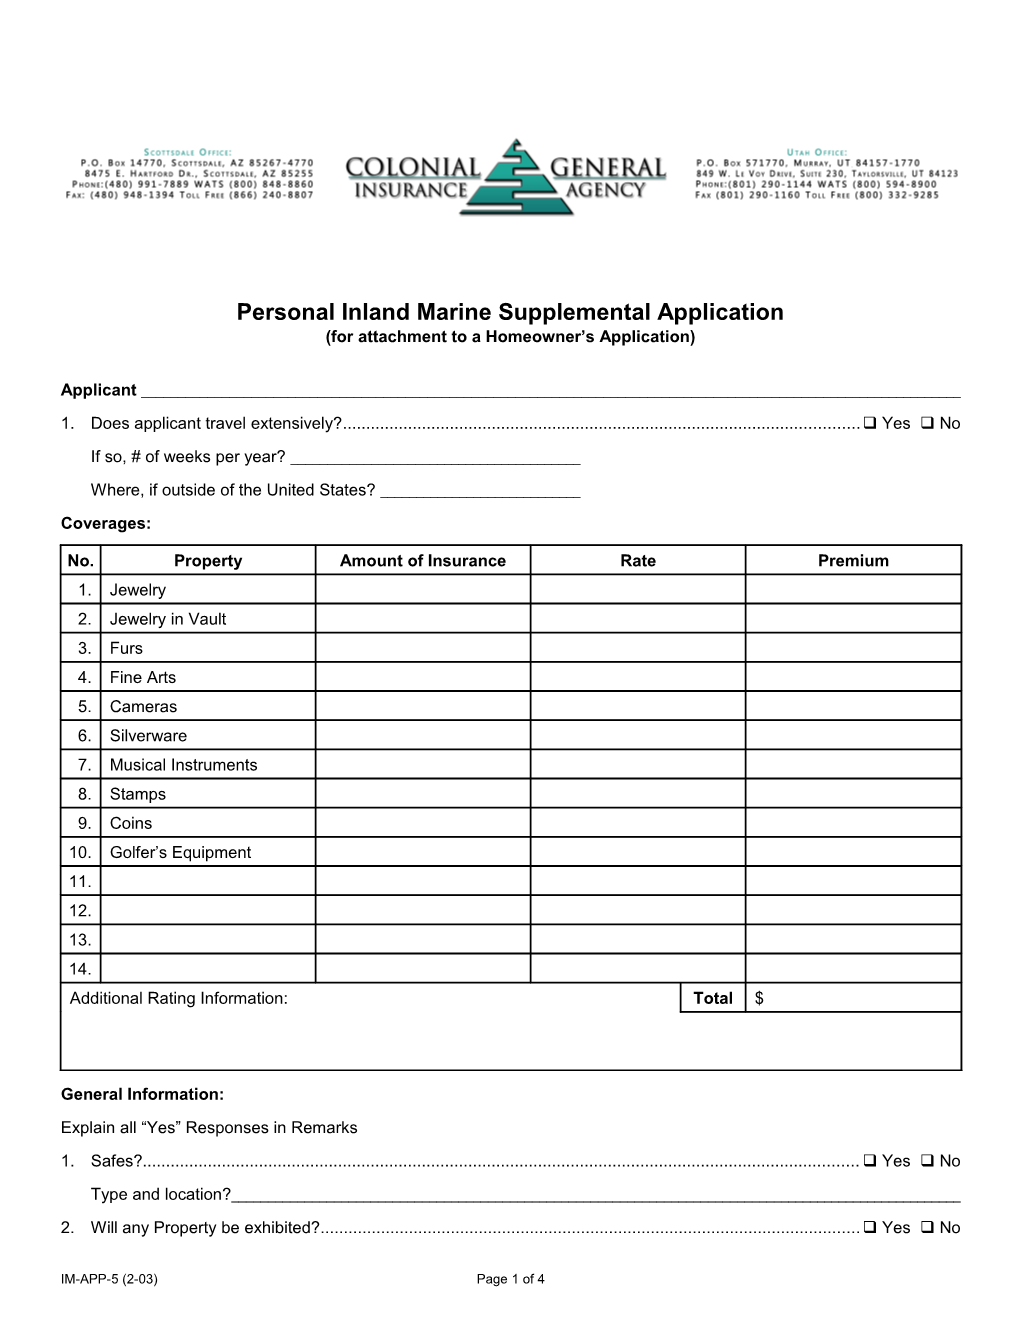 Personal Inland Marine Supplemental Application